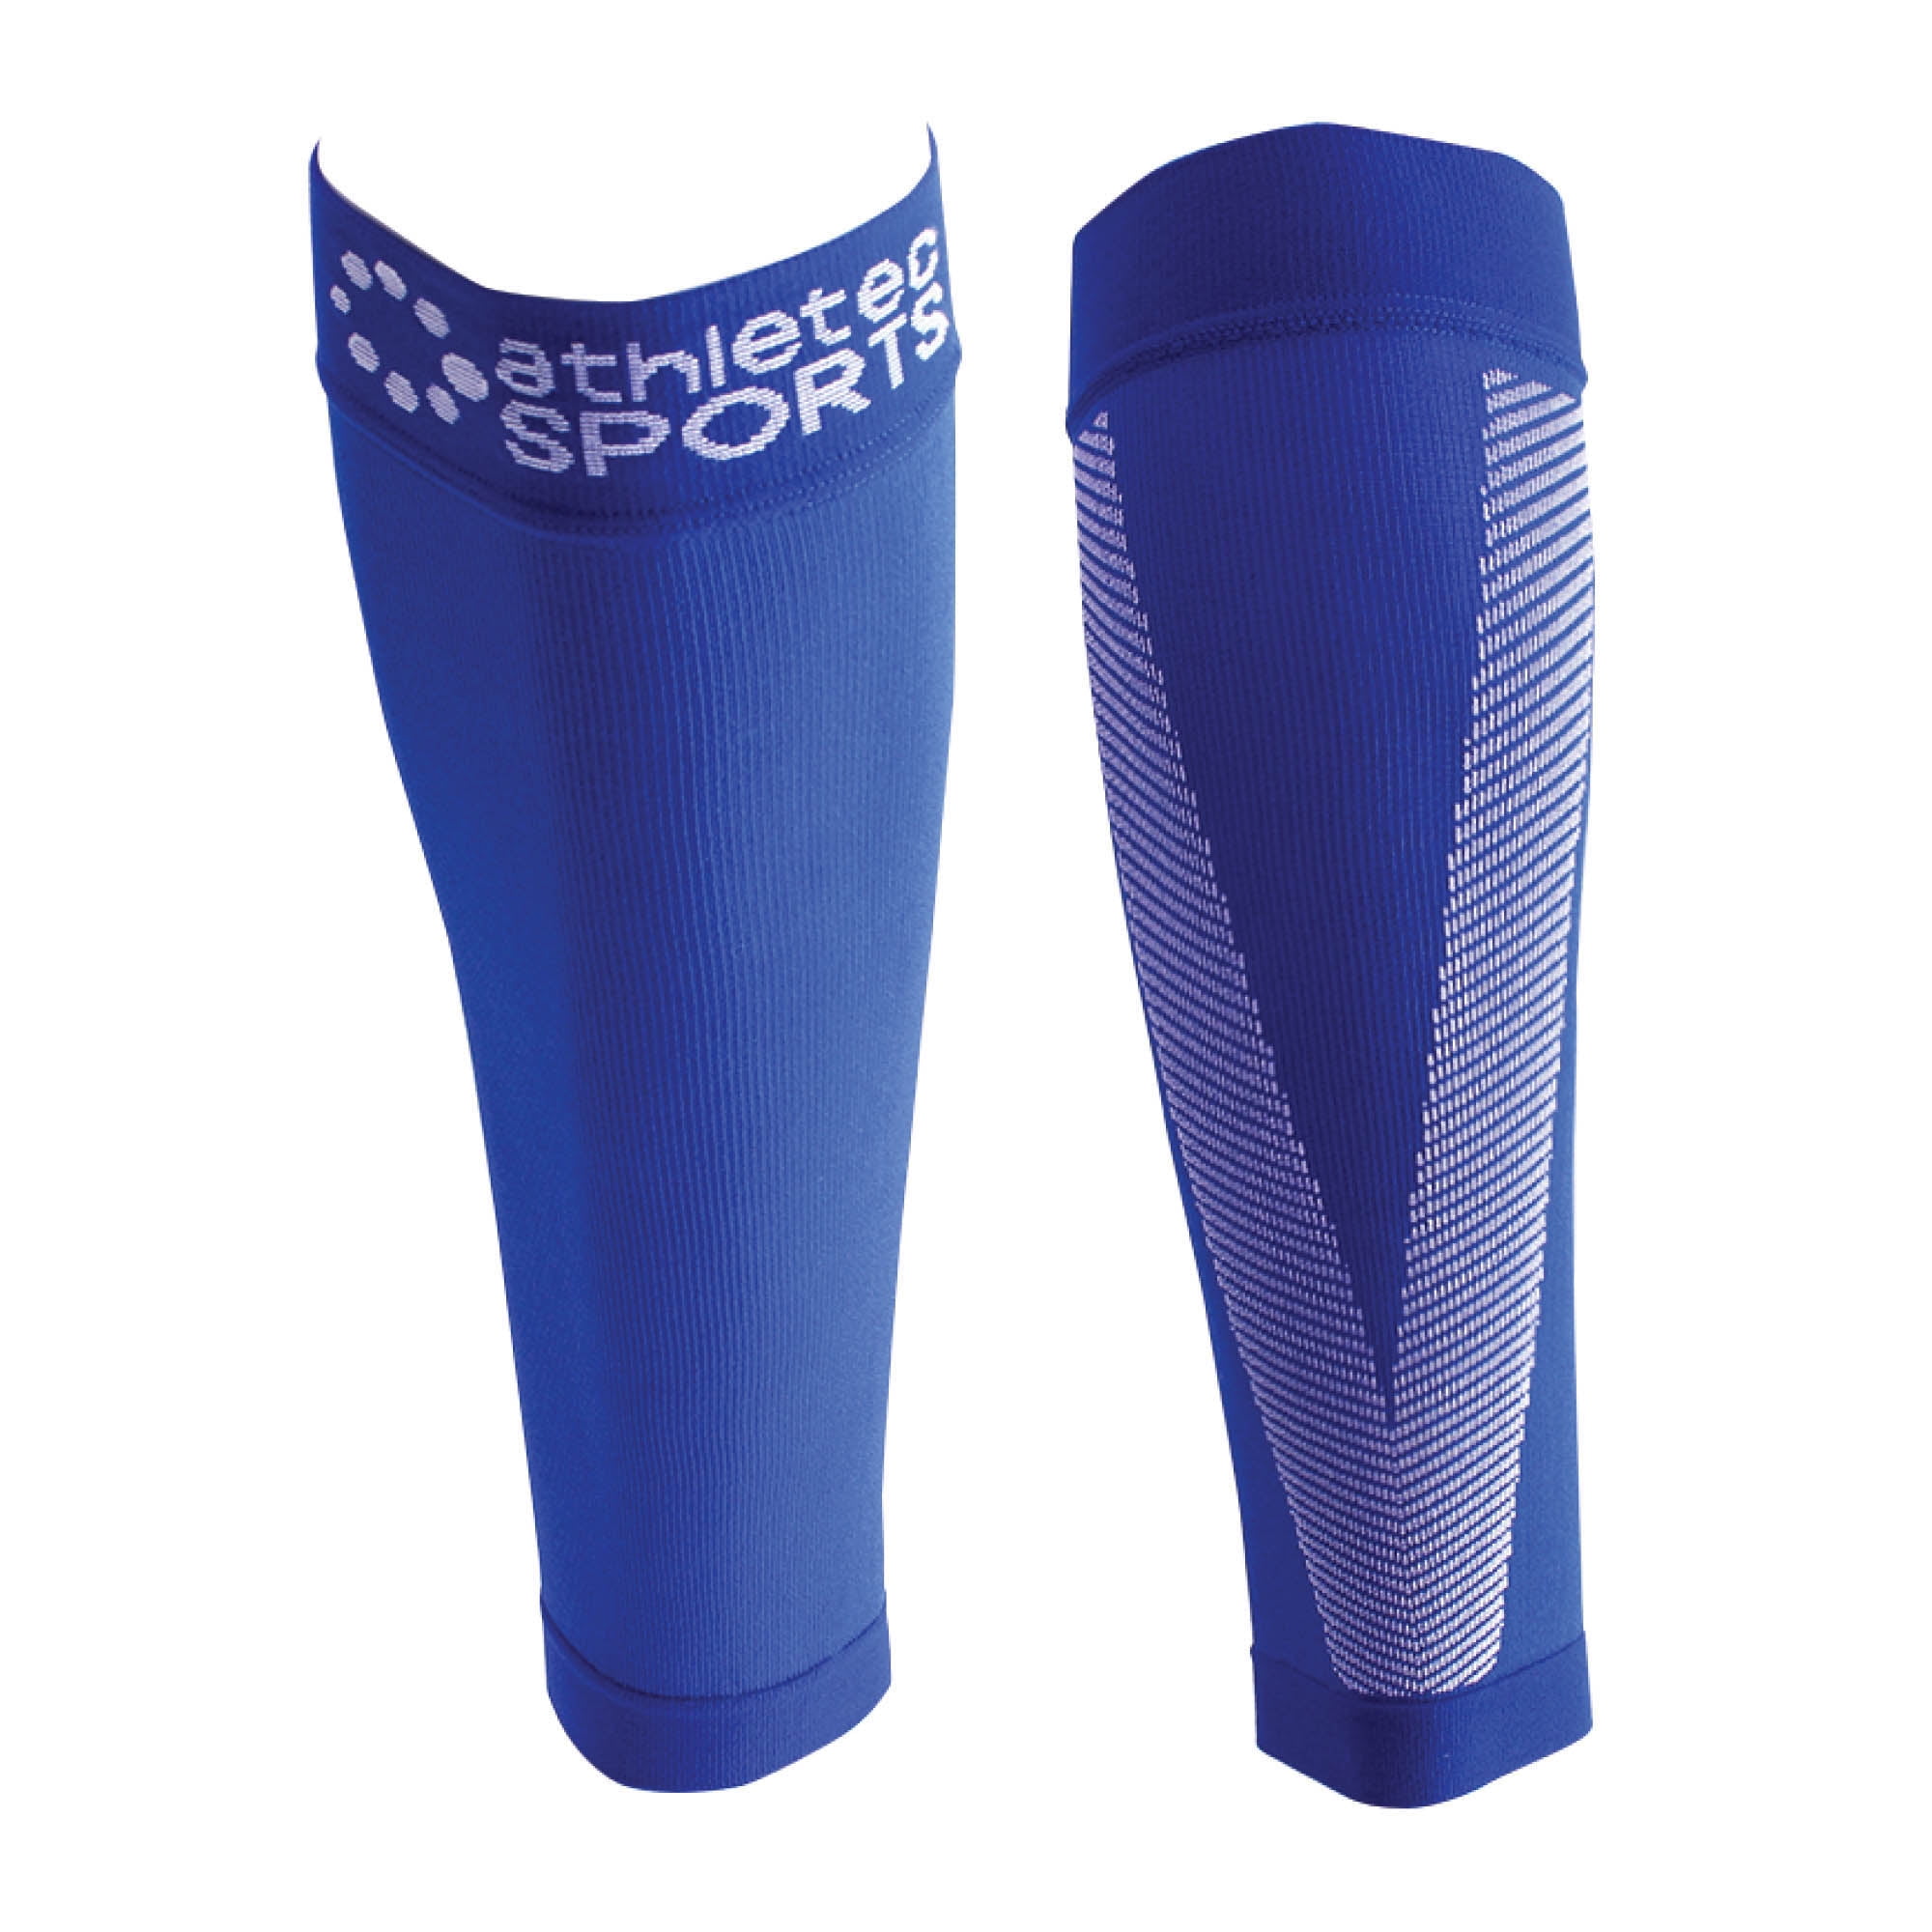 Athletec Sport Compression Calf Sleeve (20-30 mmHg) for Shin